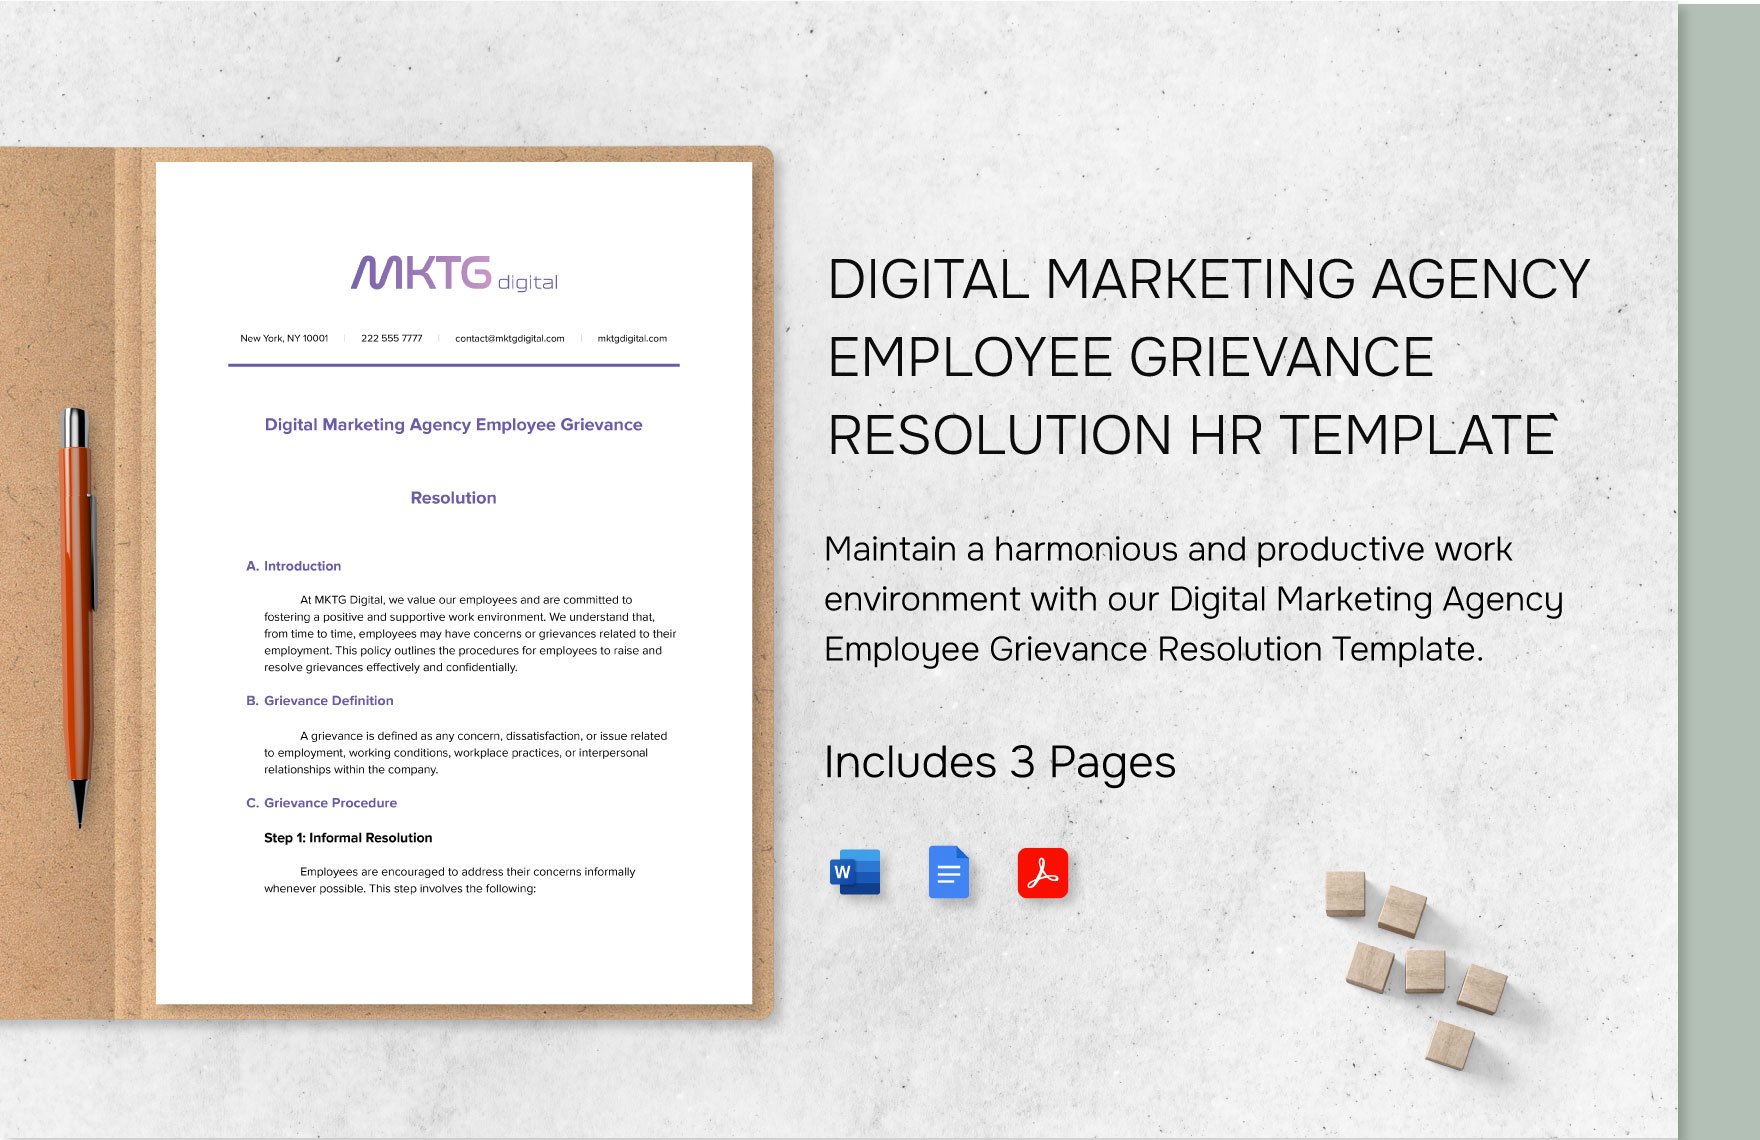 Free Digital Marketing Agency Employee Grievance Resolution HR Template in Word, Google Docs, PDF